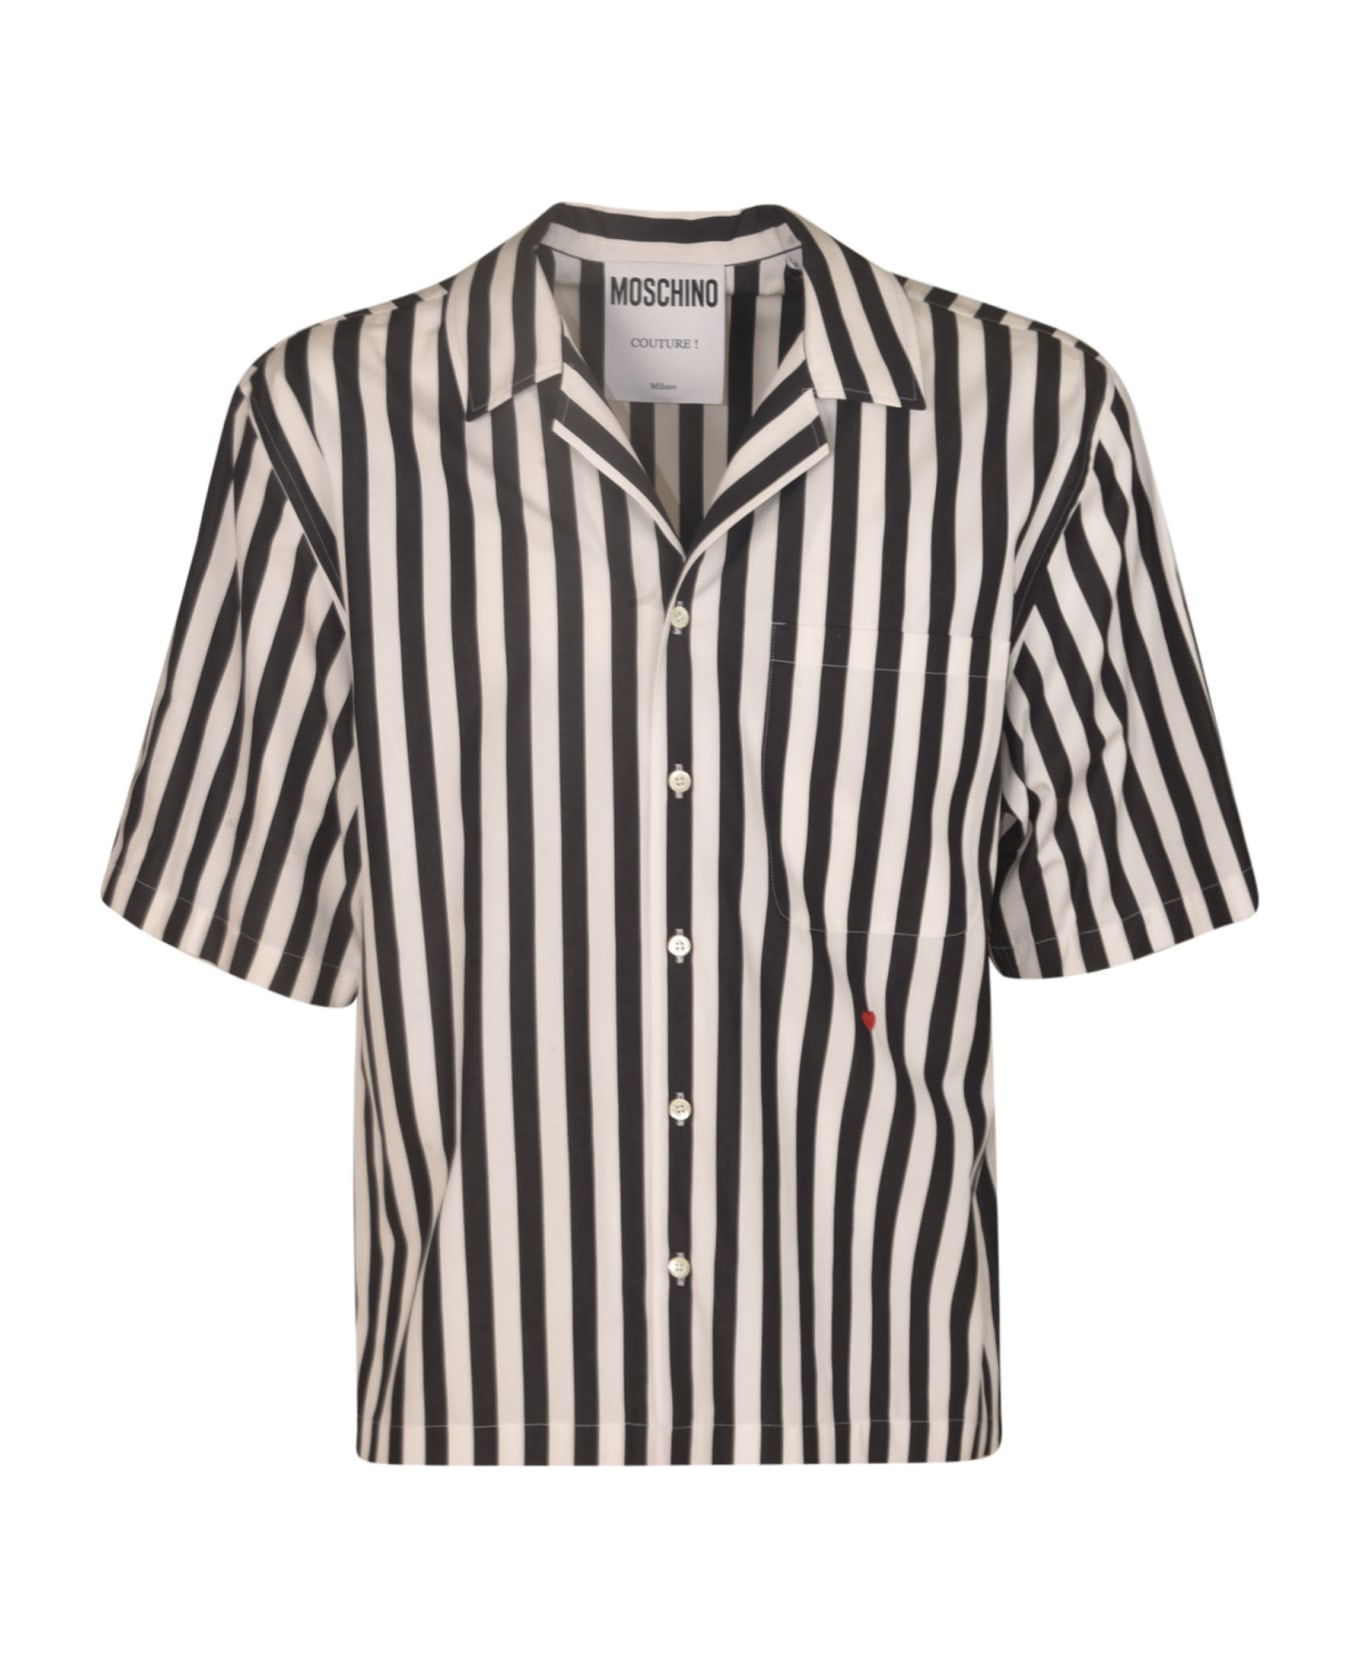 Moschino Stripe Shirt - 2555